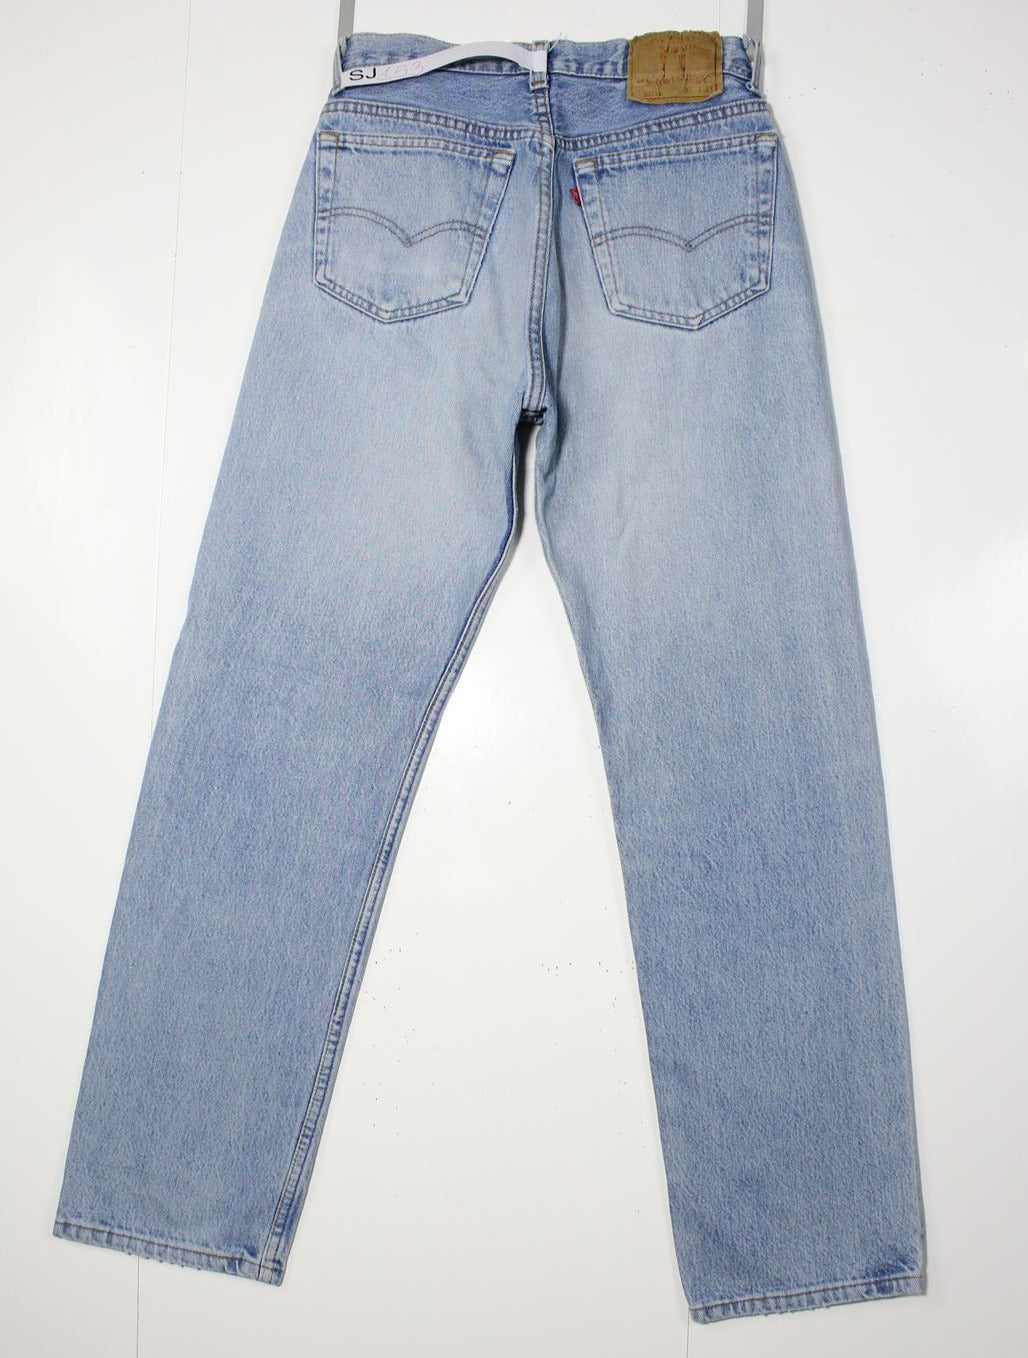 Levi's 501xx Denim W33 L33 Denim Made In USA Jeans Vintage